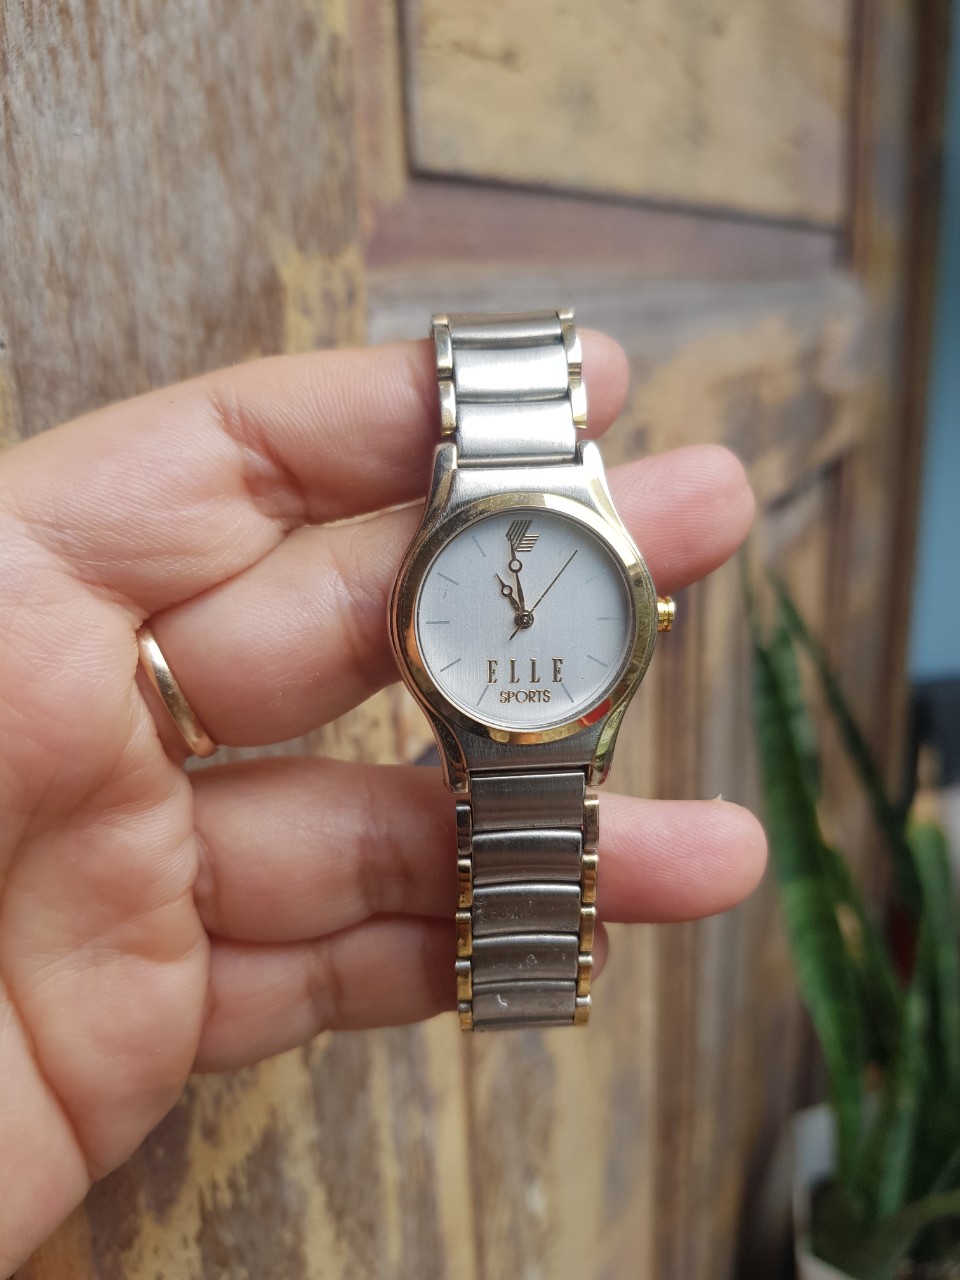 Đồng hồ nữ hiệu ELLE đồng hồ si Nhật mặt tròn size mặt 27mm cả núm HCM